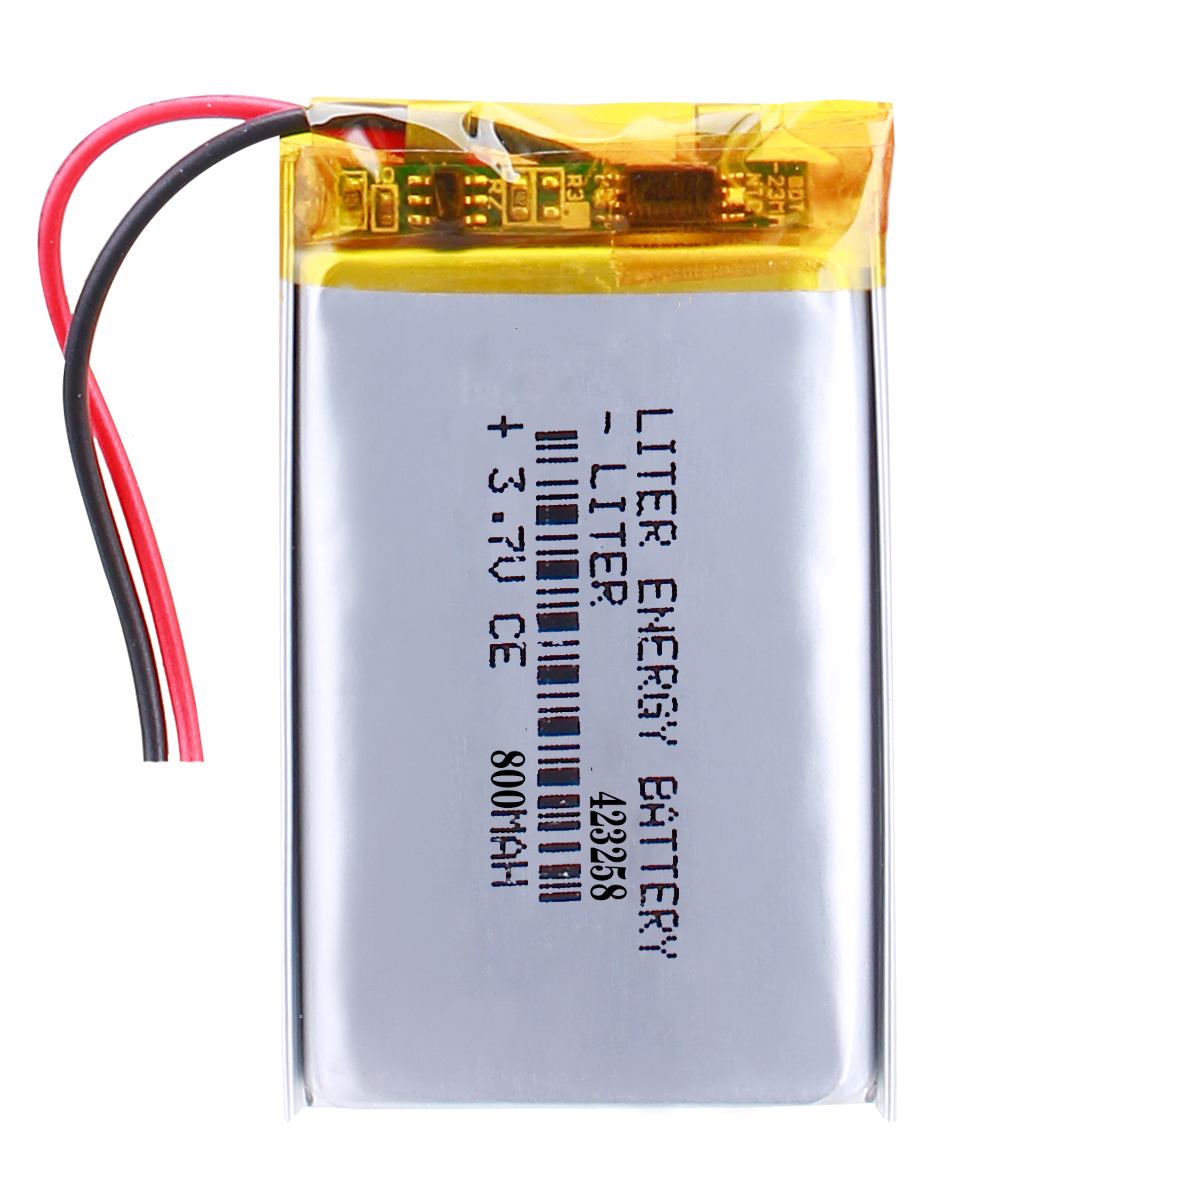 3.7V Standard Lithium Polymer Battery LP423258 800mAh 2.96Wh